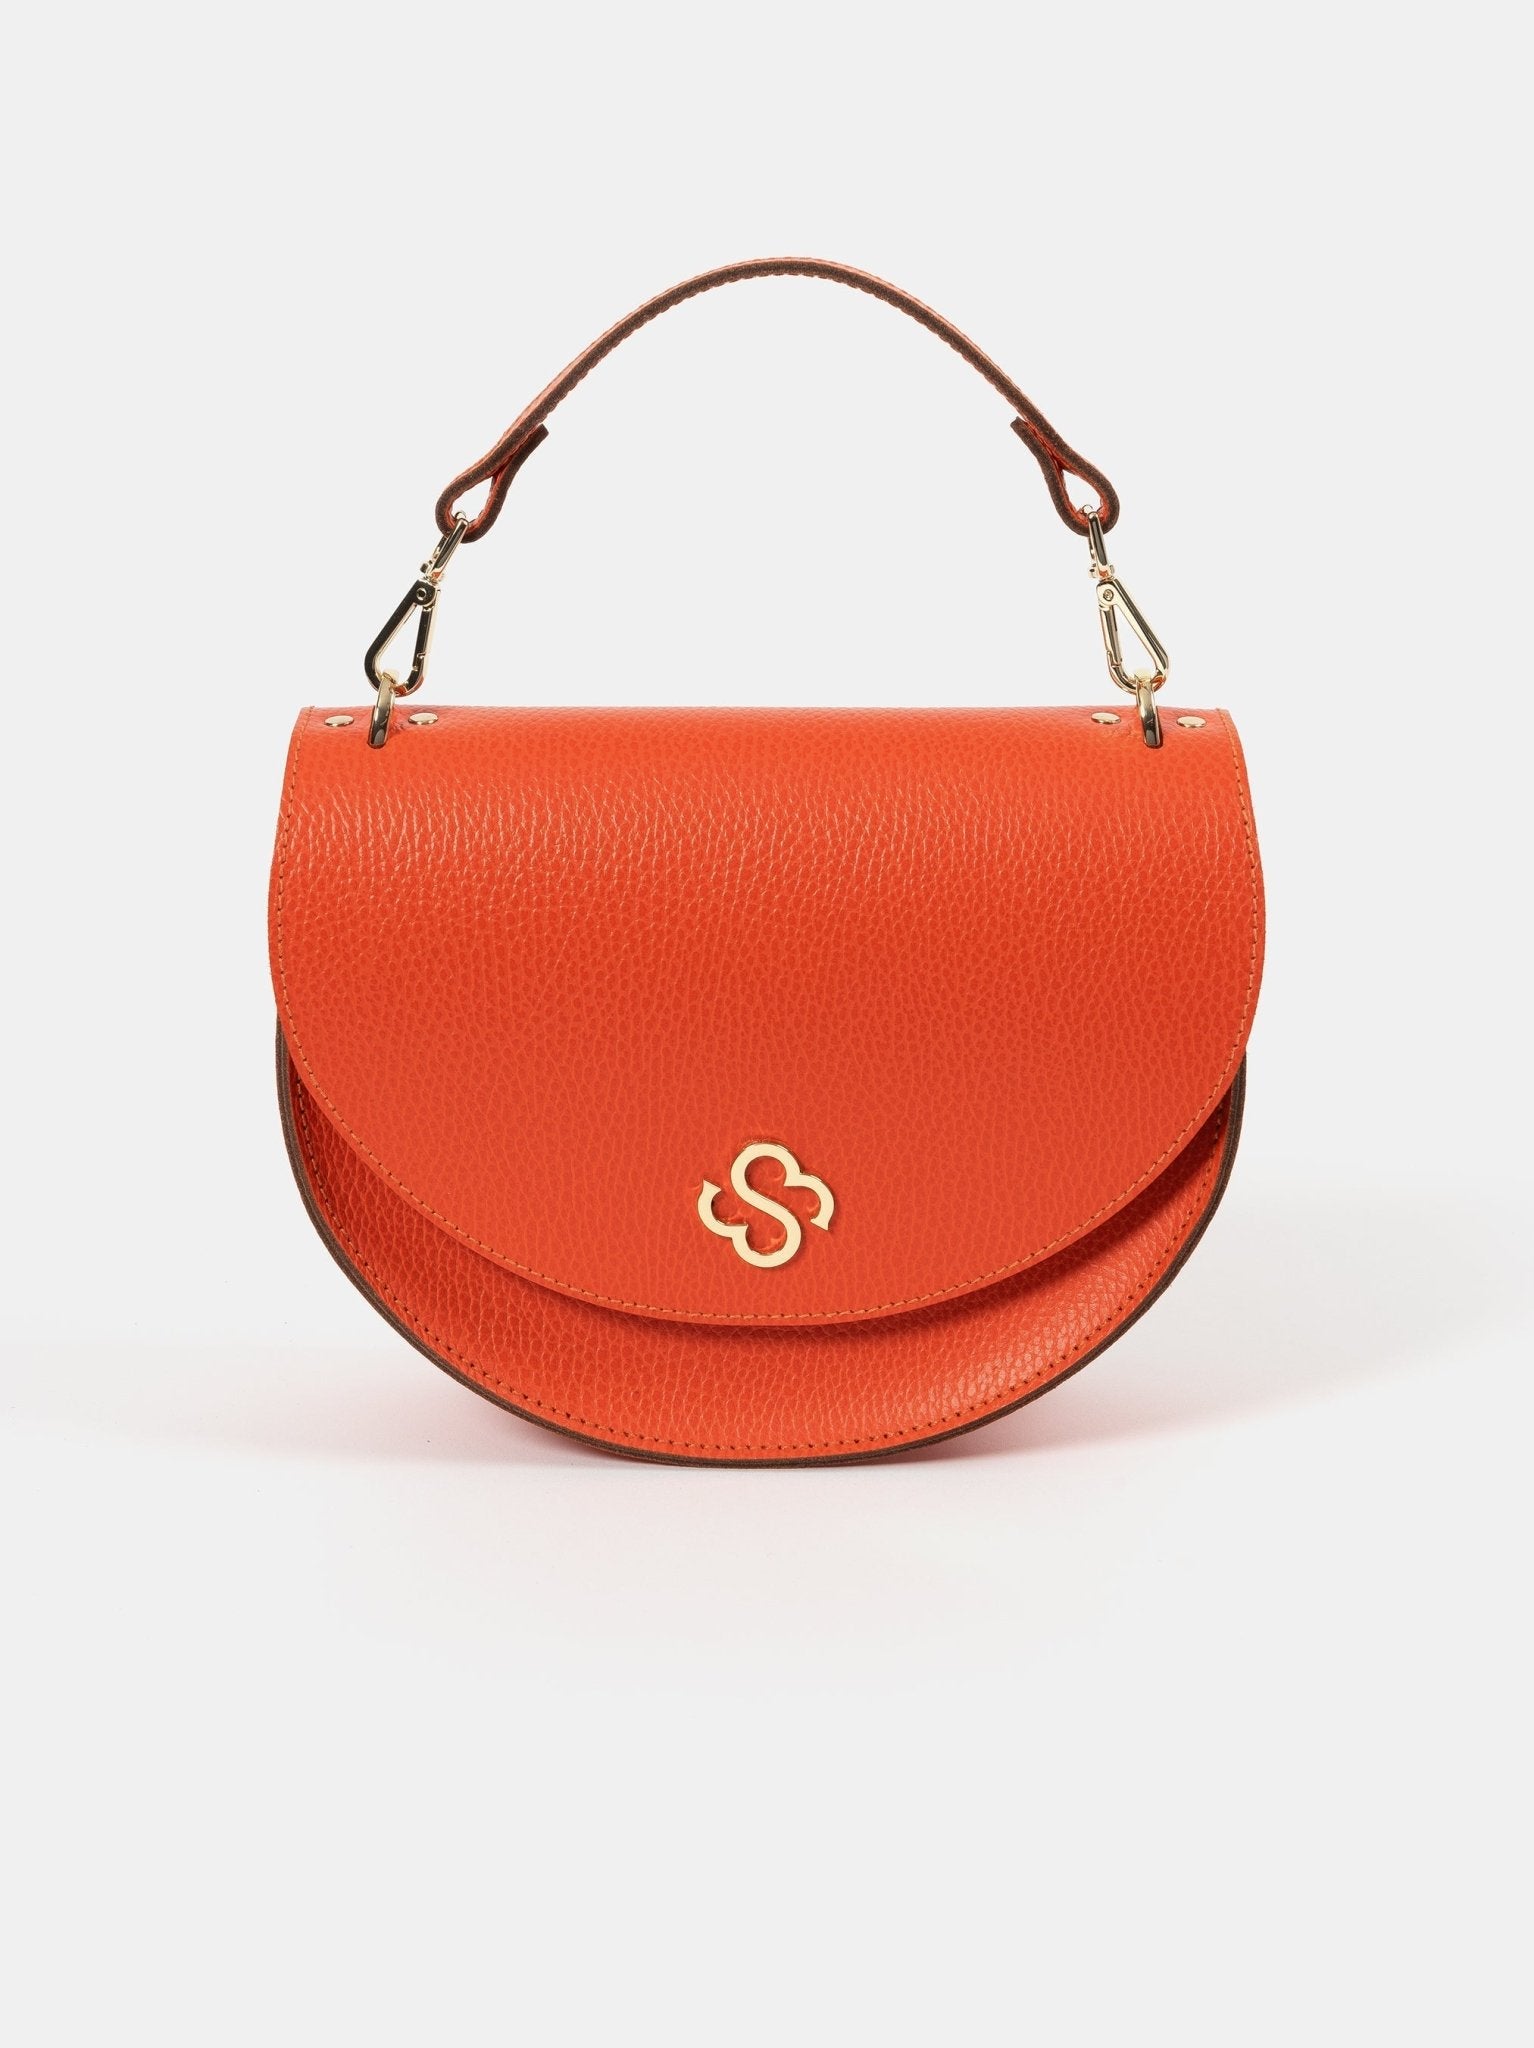 The Cambridge Satchel Co. Women's Handbag product